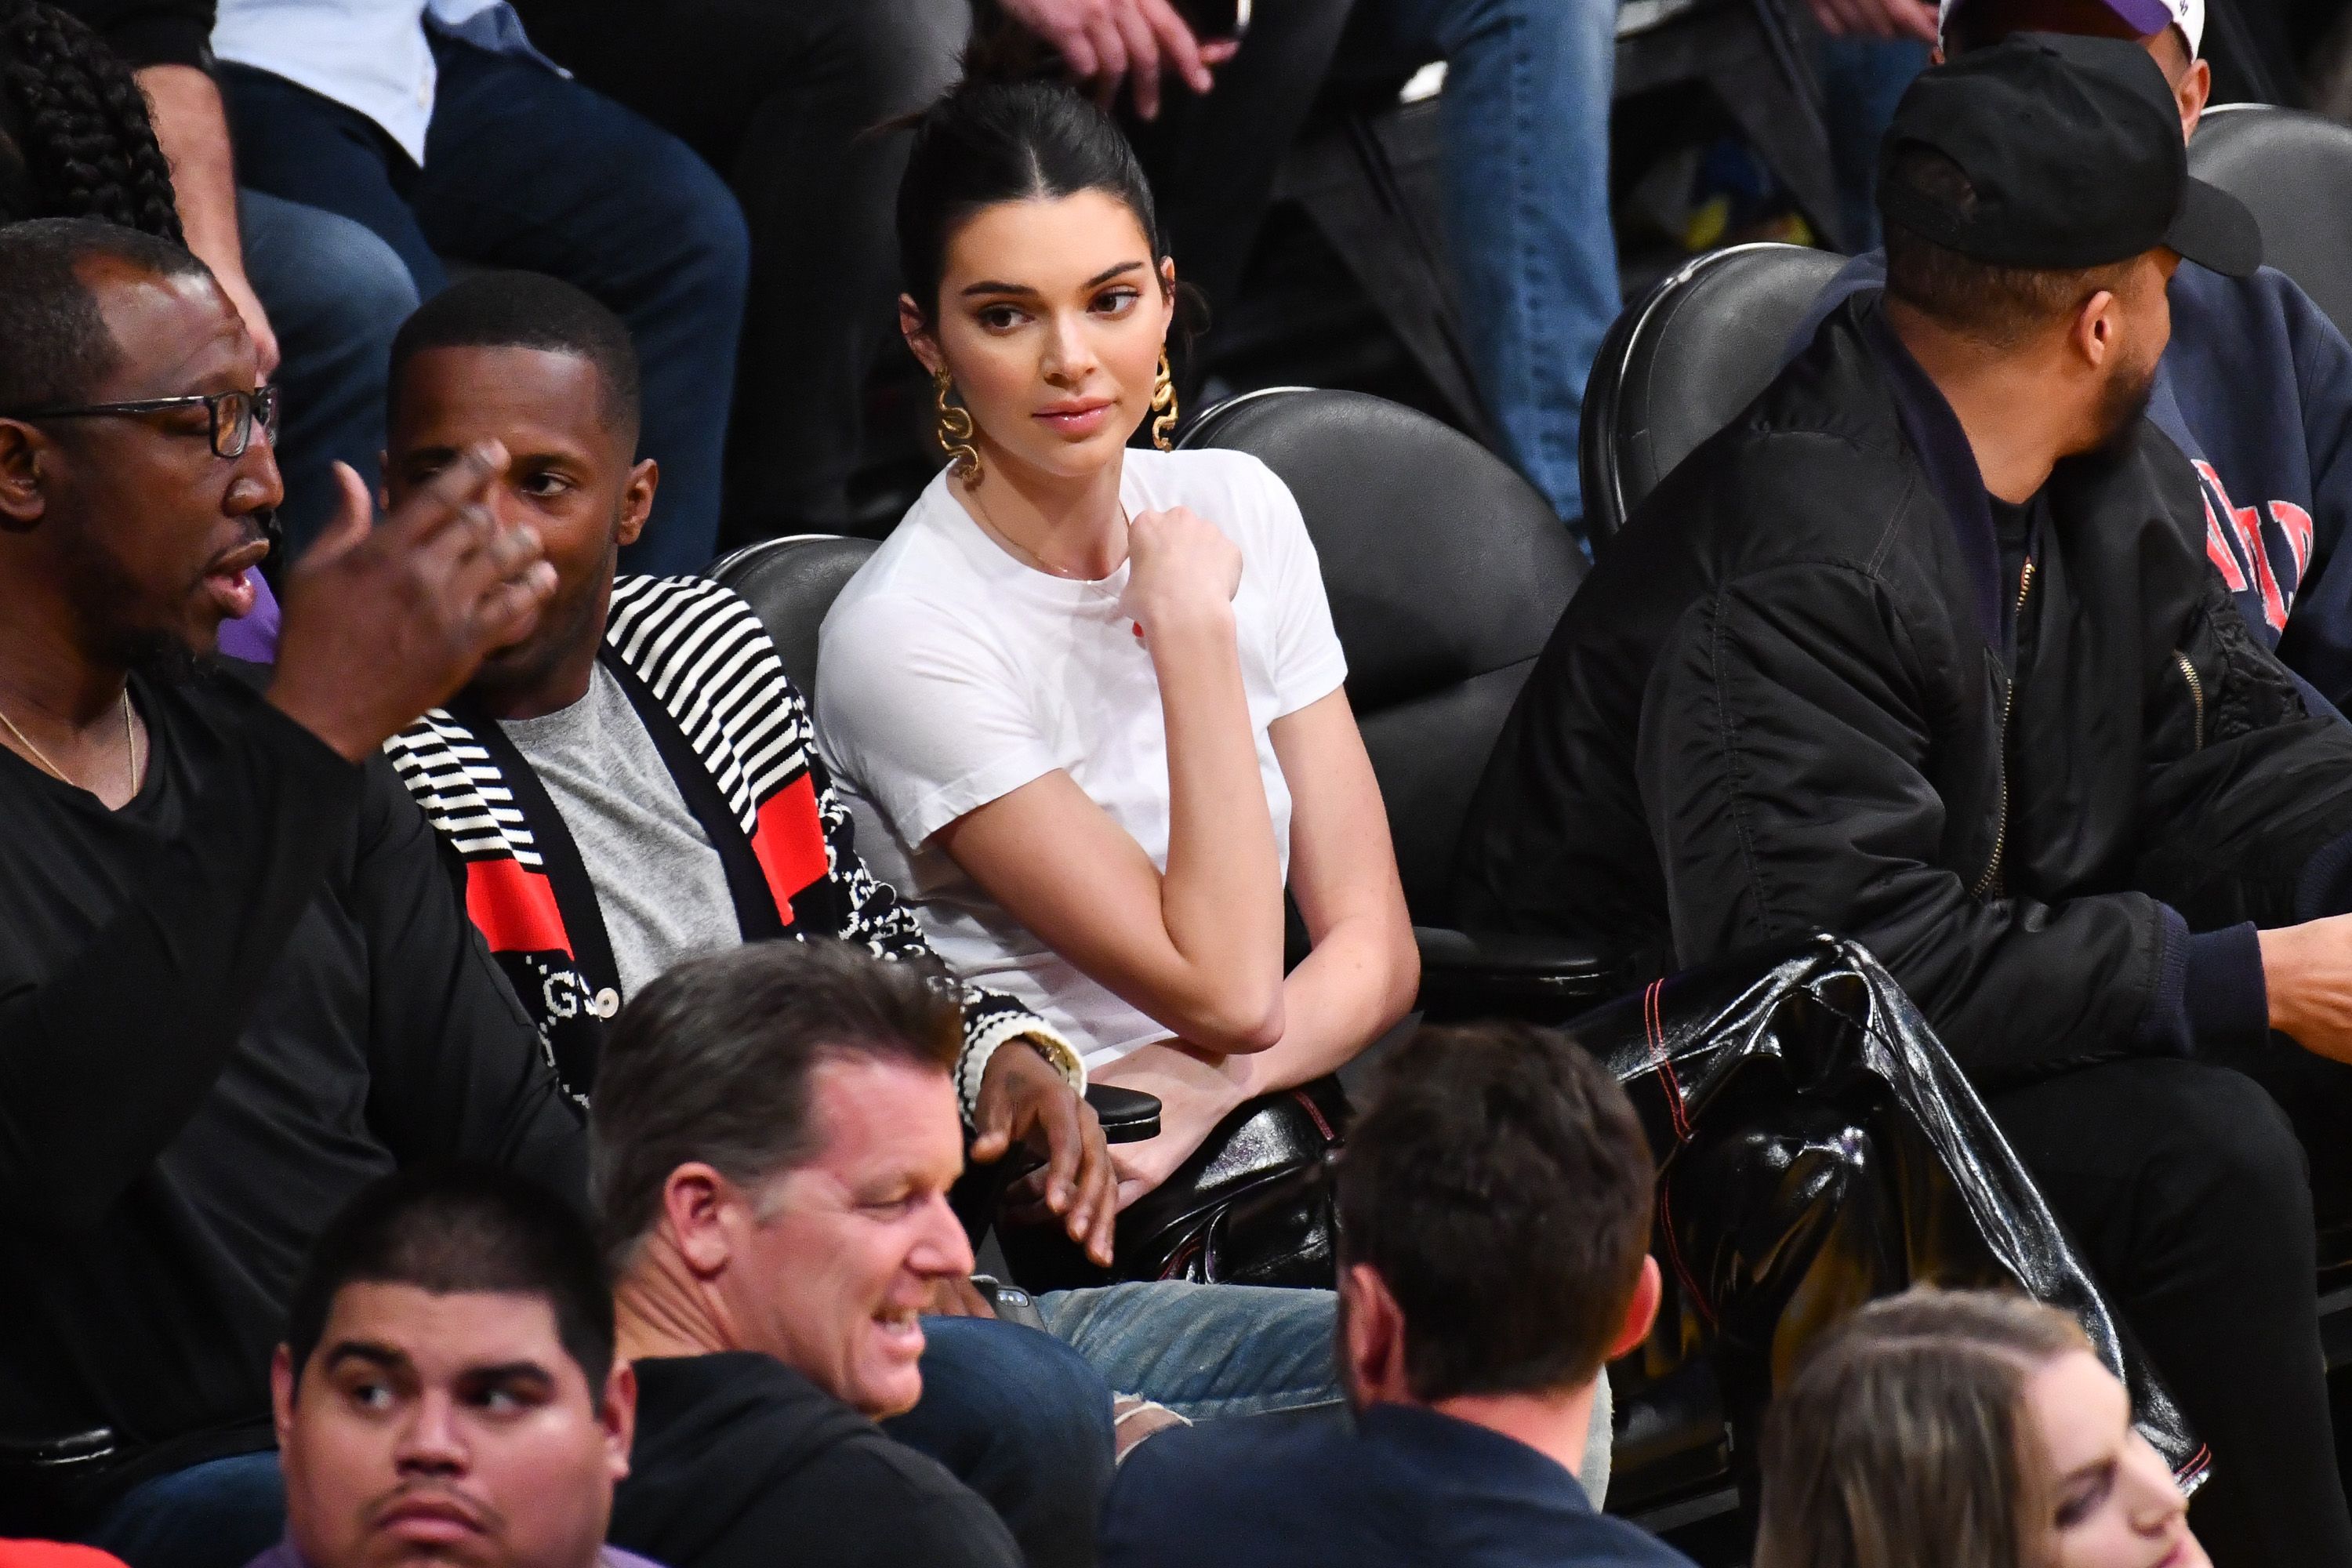 Kendall Jenner Mini Louis Vuitton Bag at Basketball Game